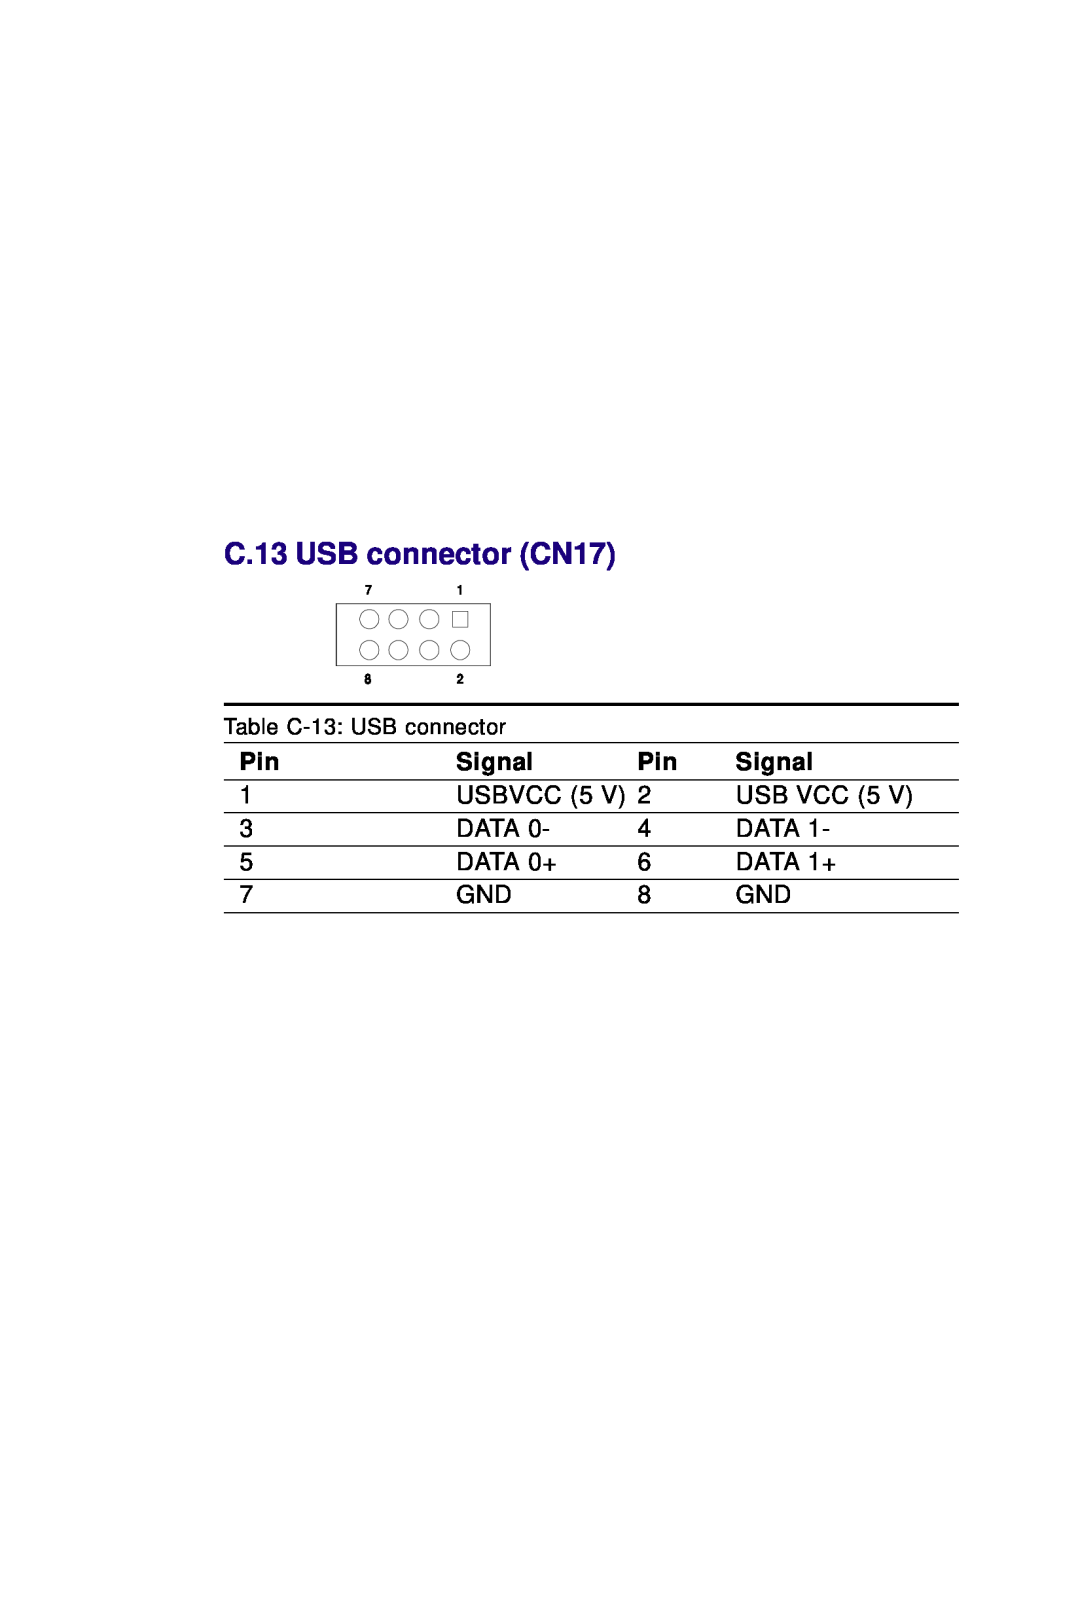 Advantech PCM-3350 Series user manual C.13 USB connector CN17, Signal, USBVCC 5 V, USB VCC 5, Data, DATA 0+, DATA 1+ 